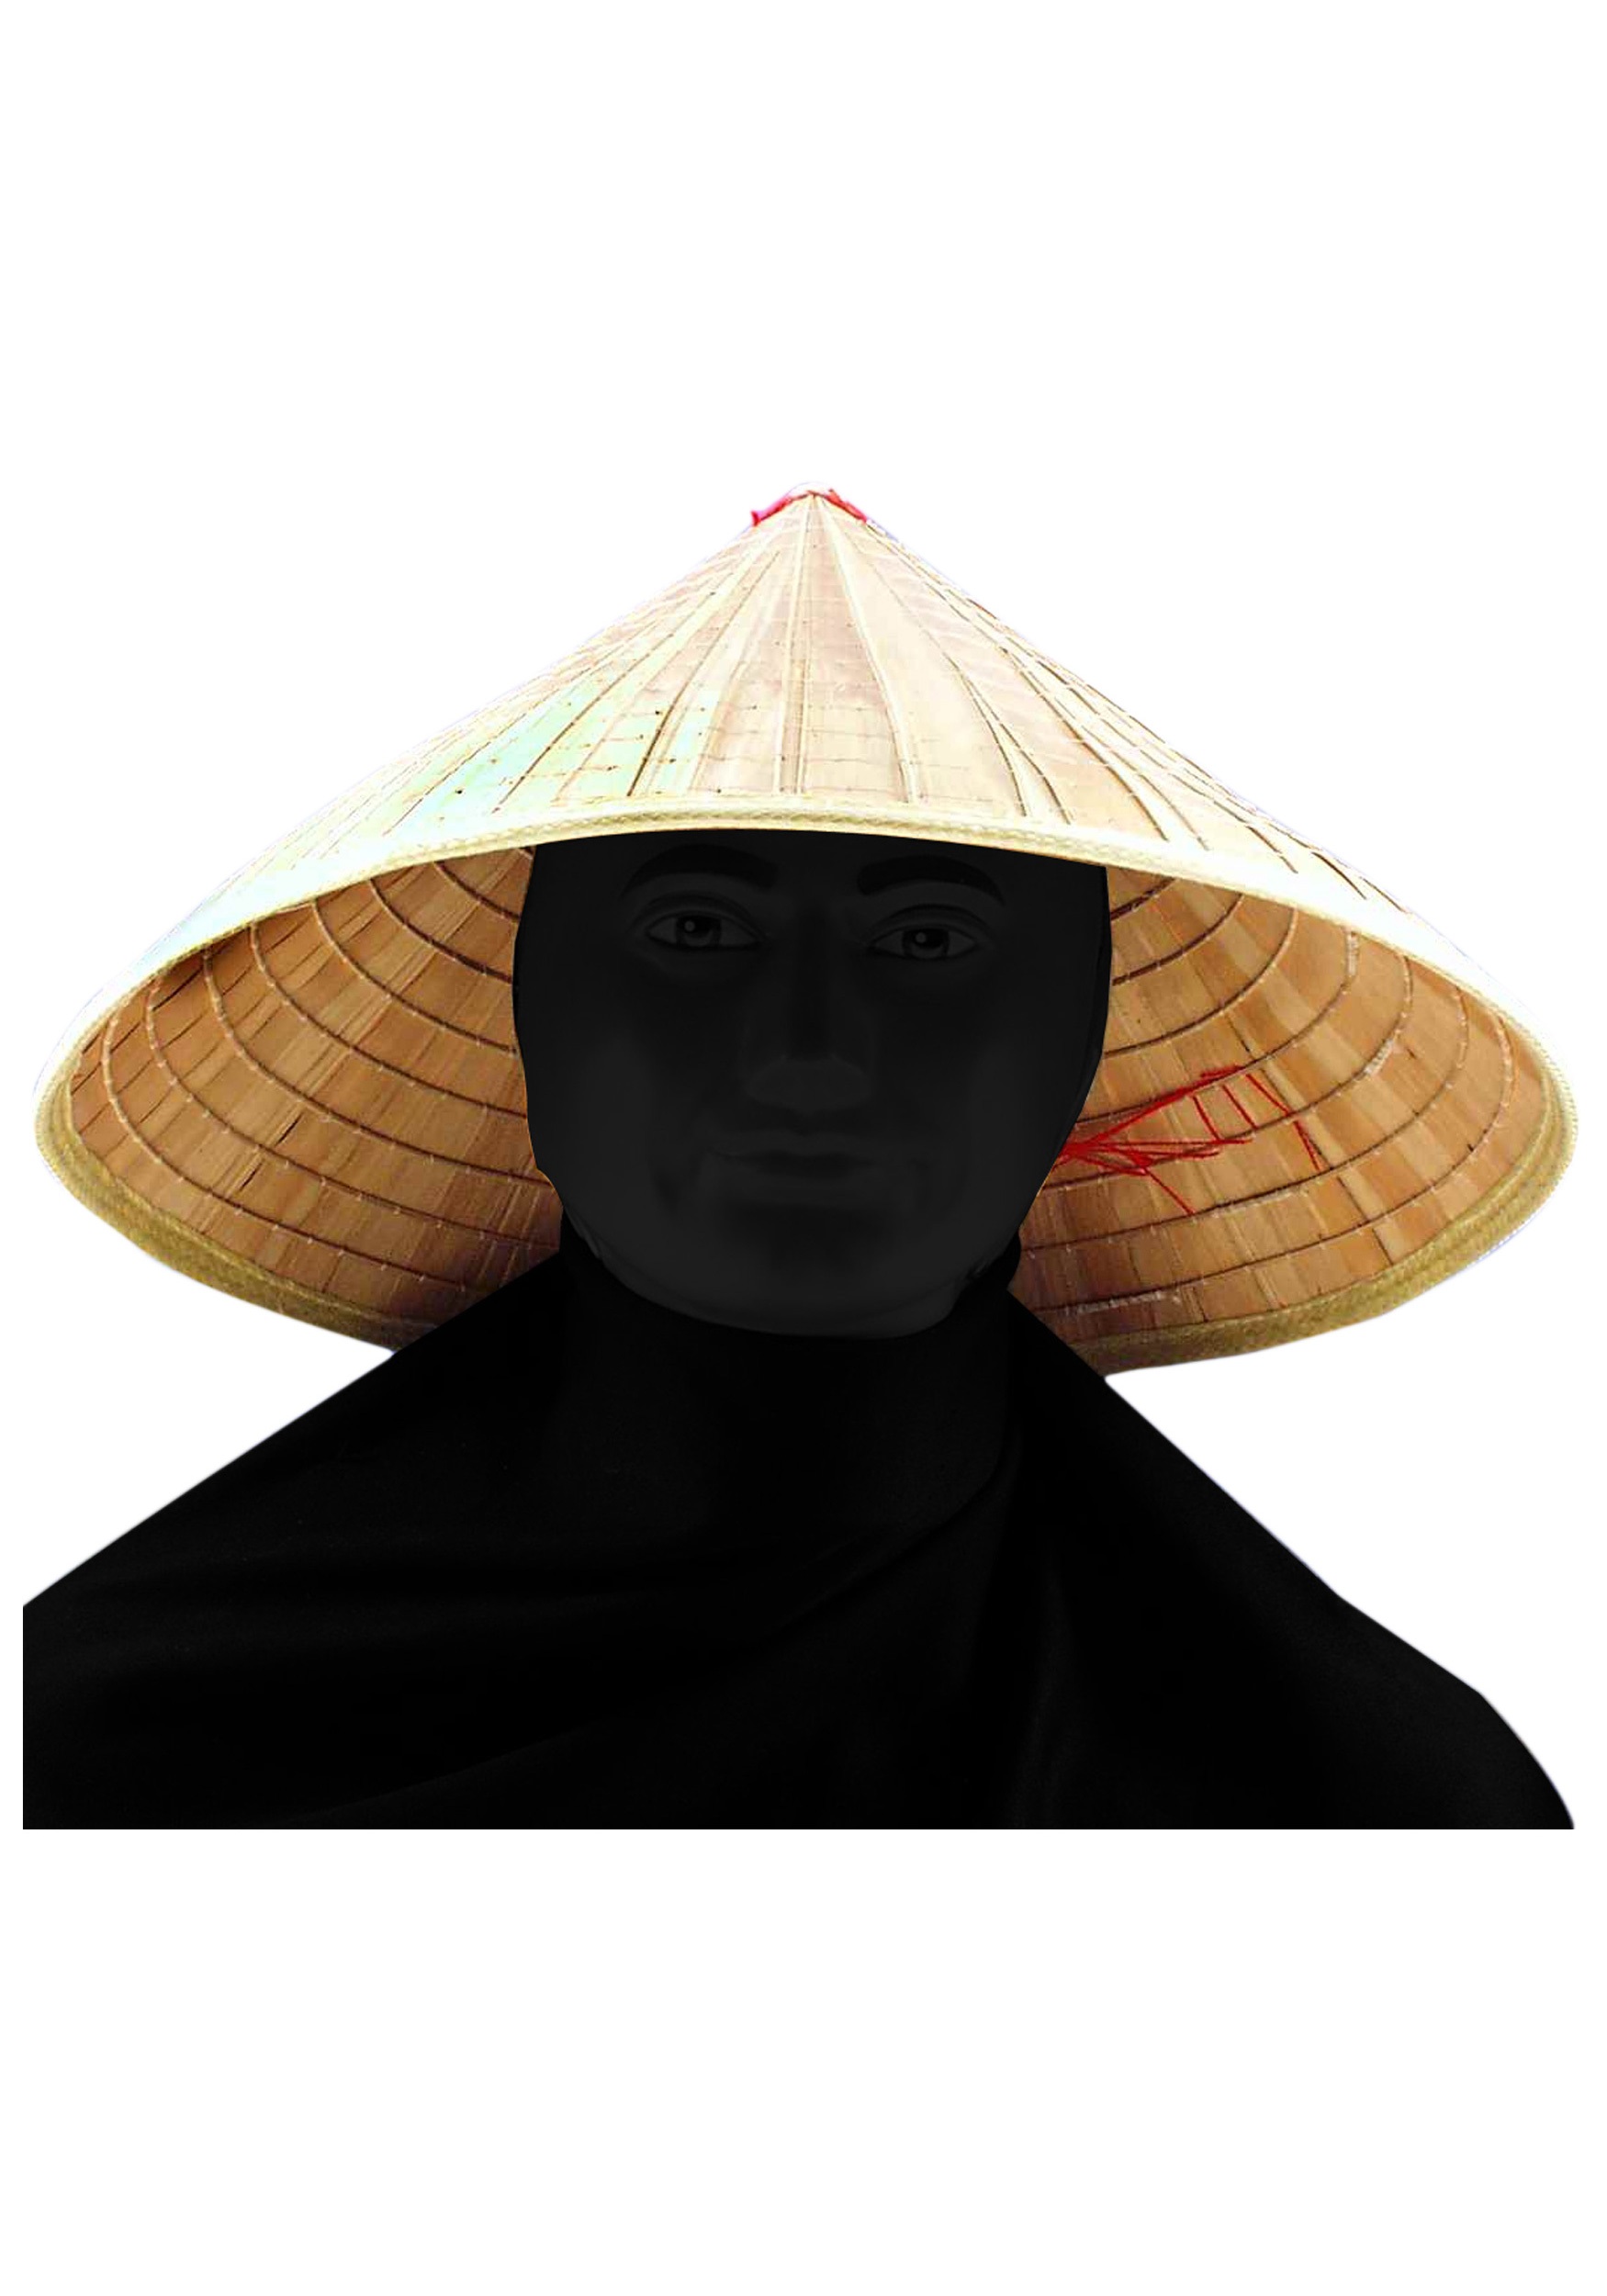 Bamboo hat. Амигаса головной убор самурая. Японская шляпа амигаса Самурай. Амигаса Ронин. Шляпа амигаса бамбуковая.